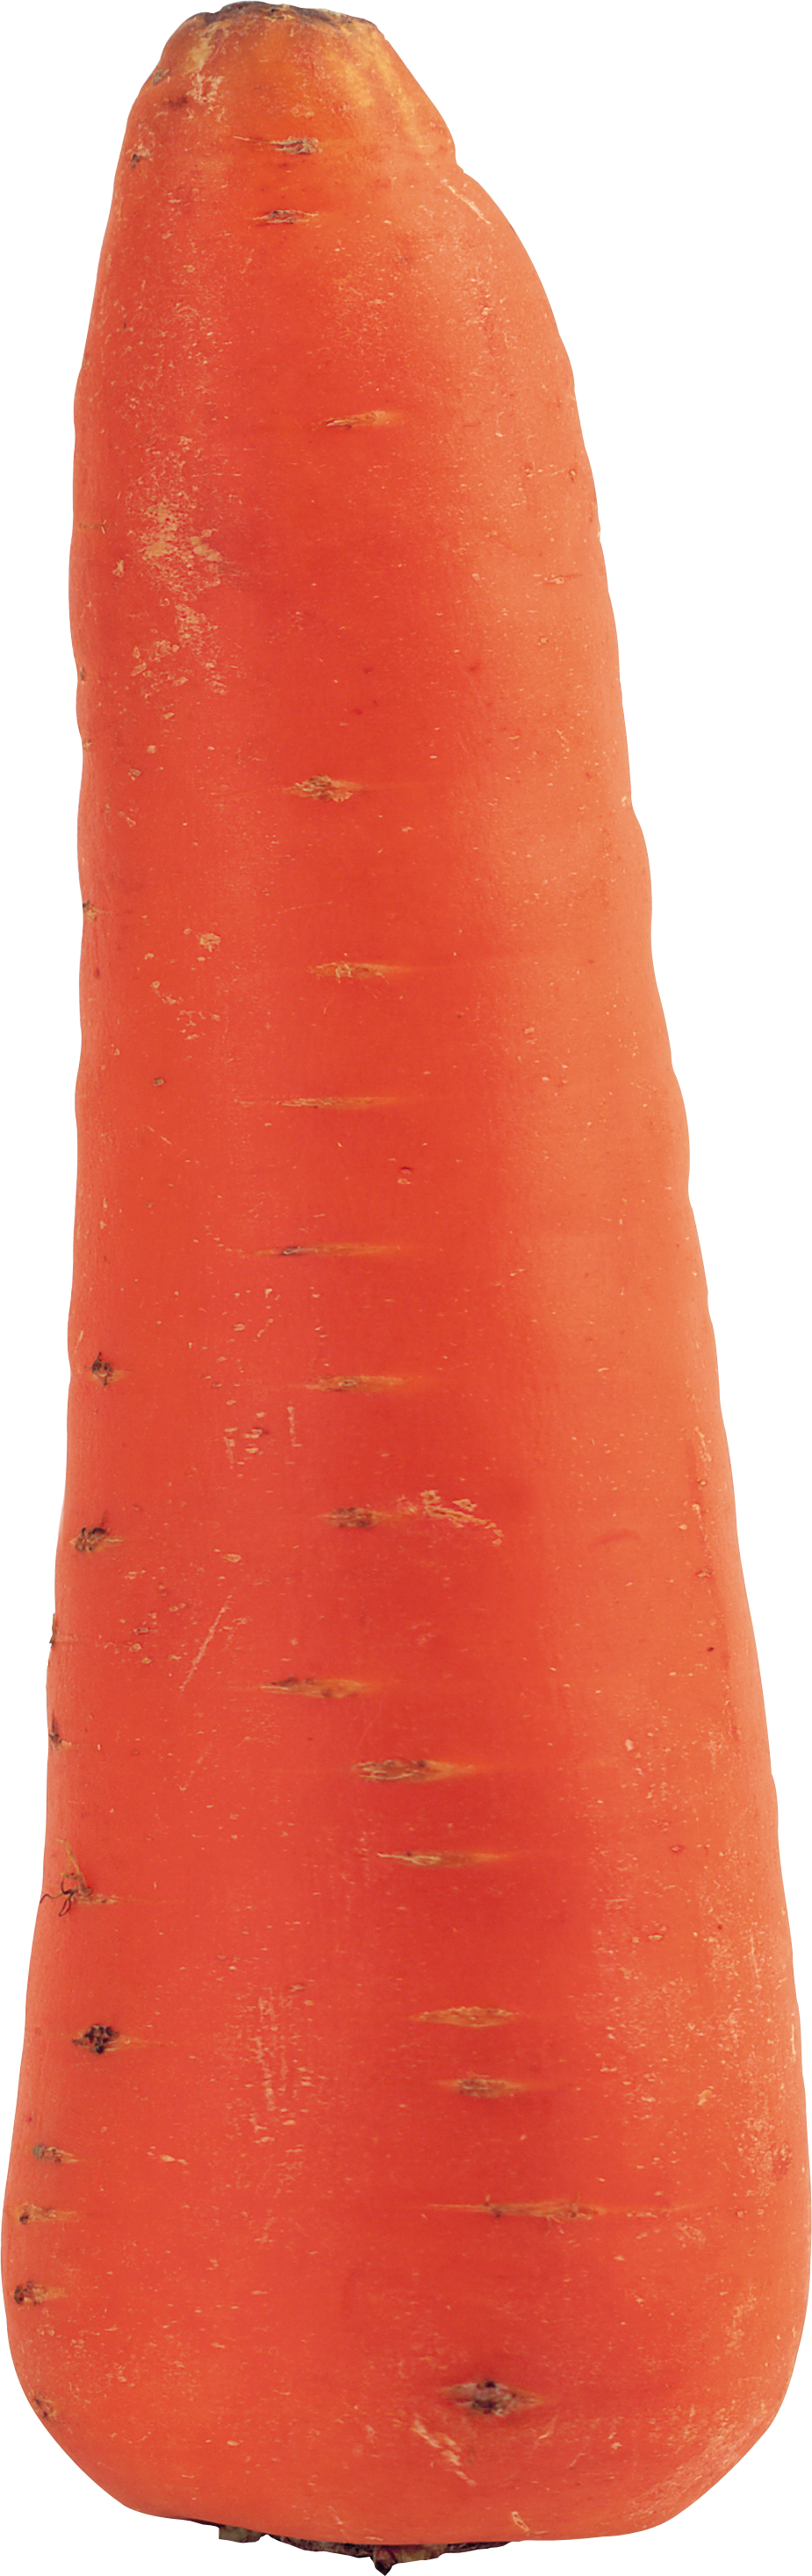 Fresh Single Carrot Isolated